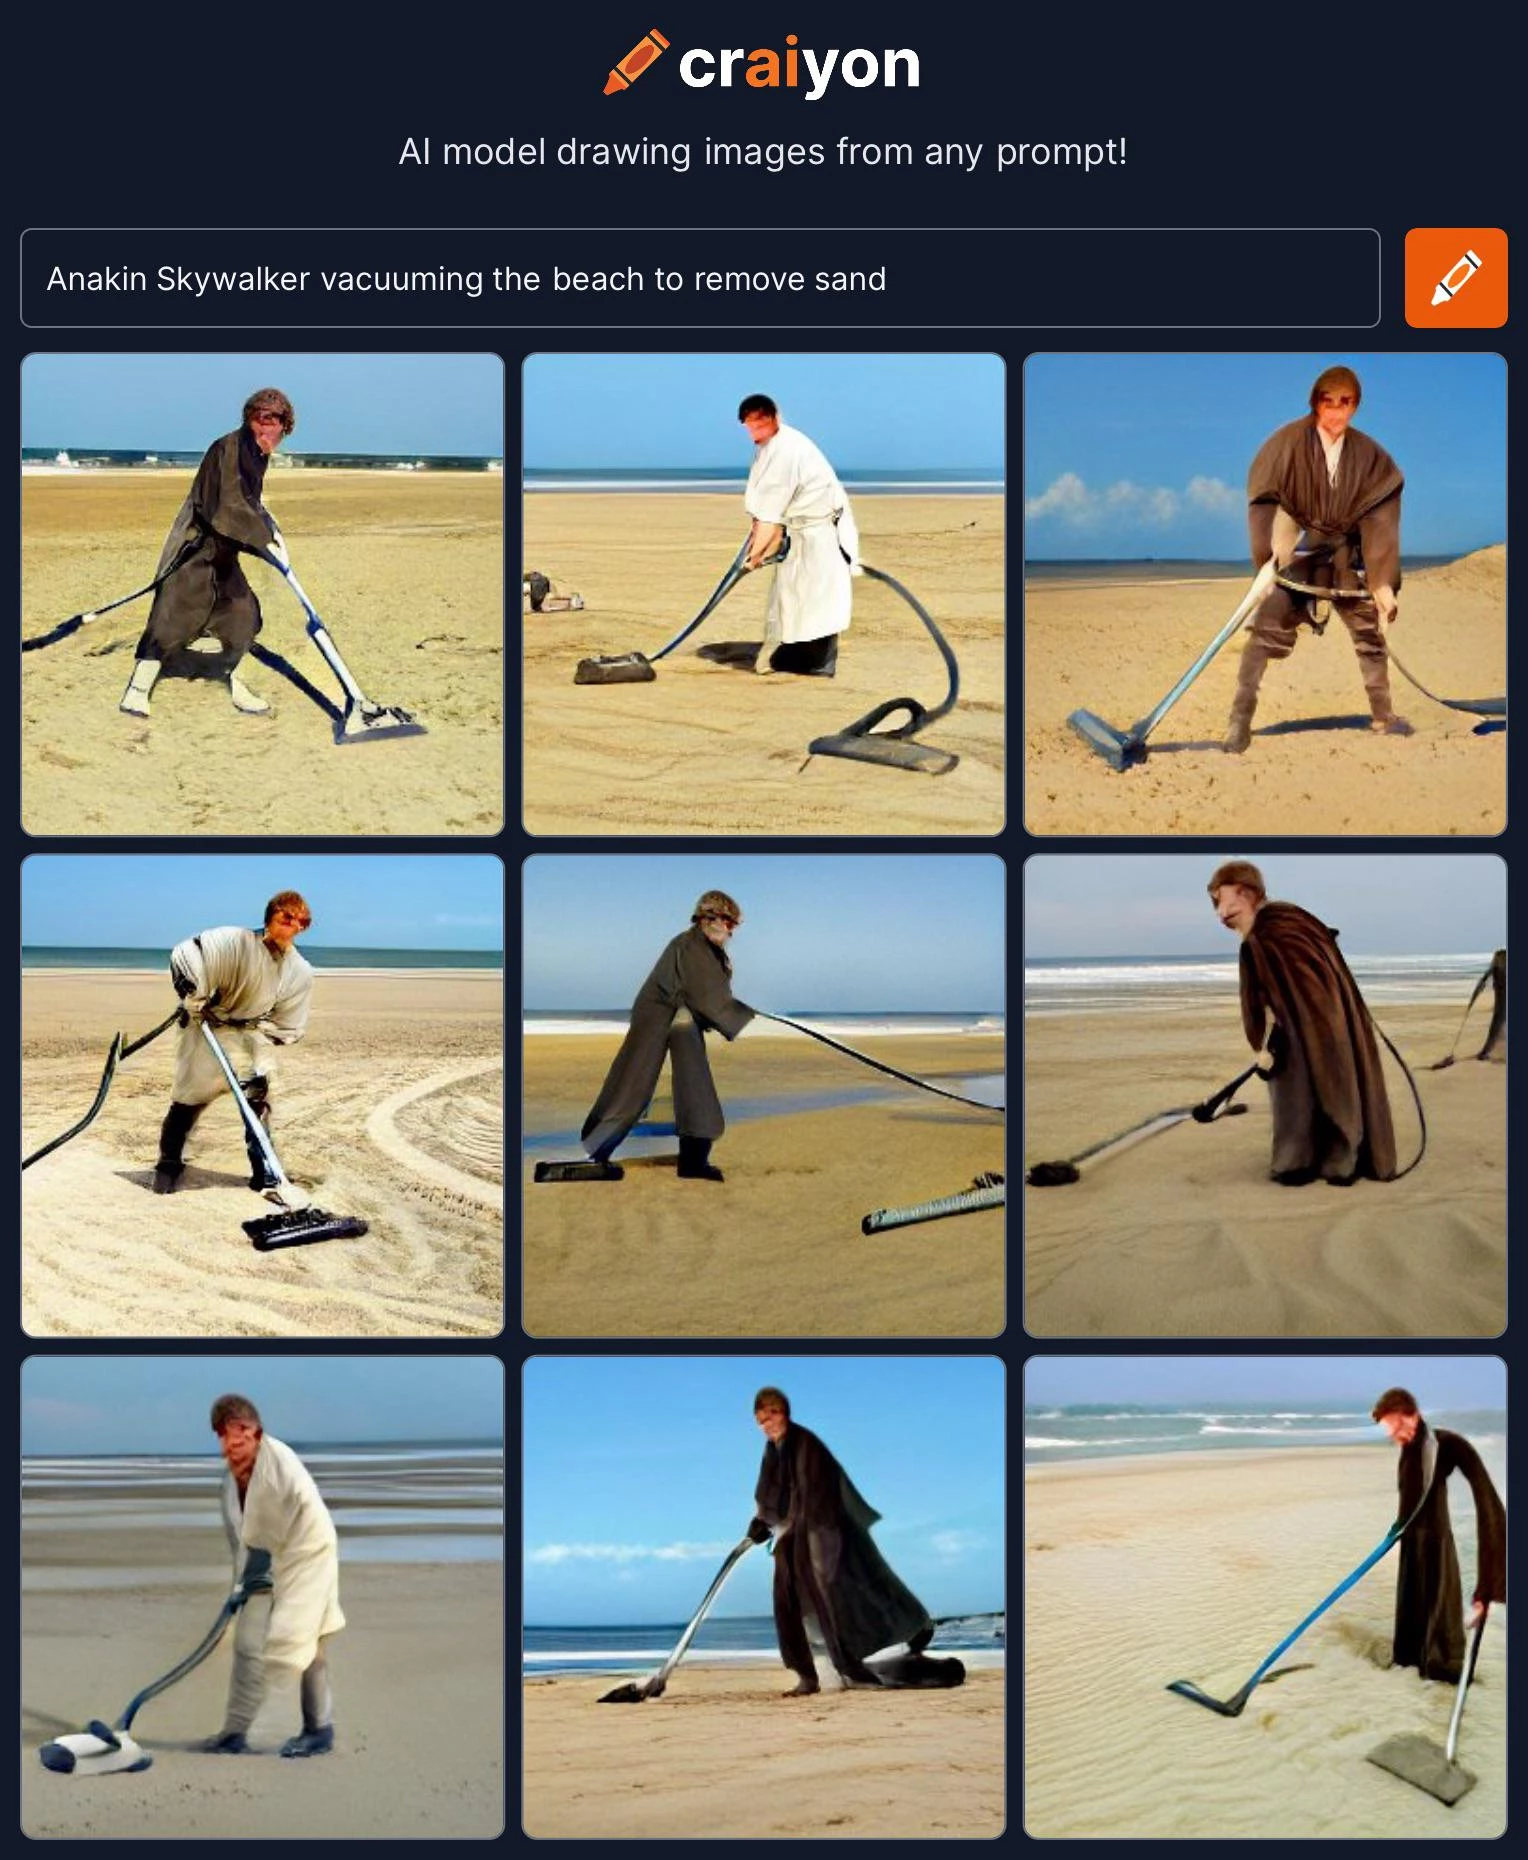 Anakin Skywalker Vacuuming The Beach To Remove Sand